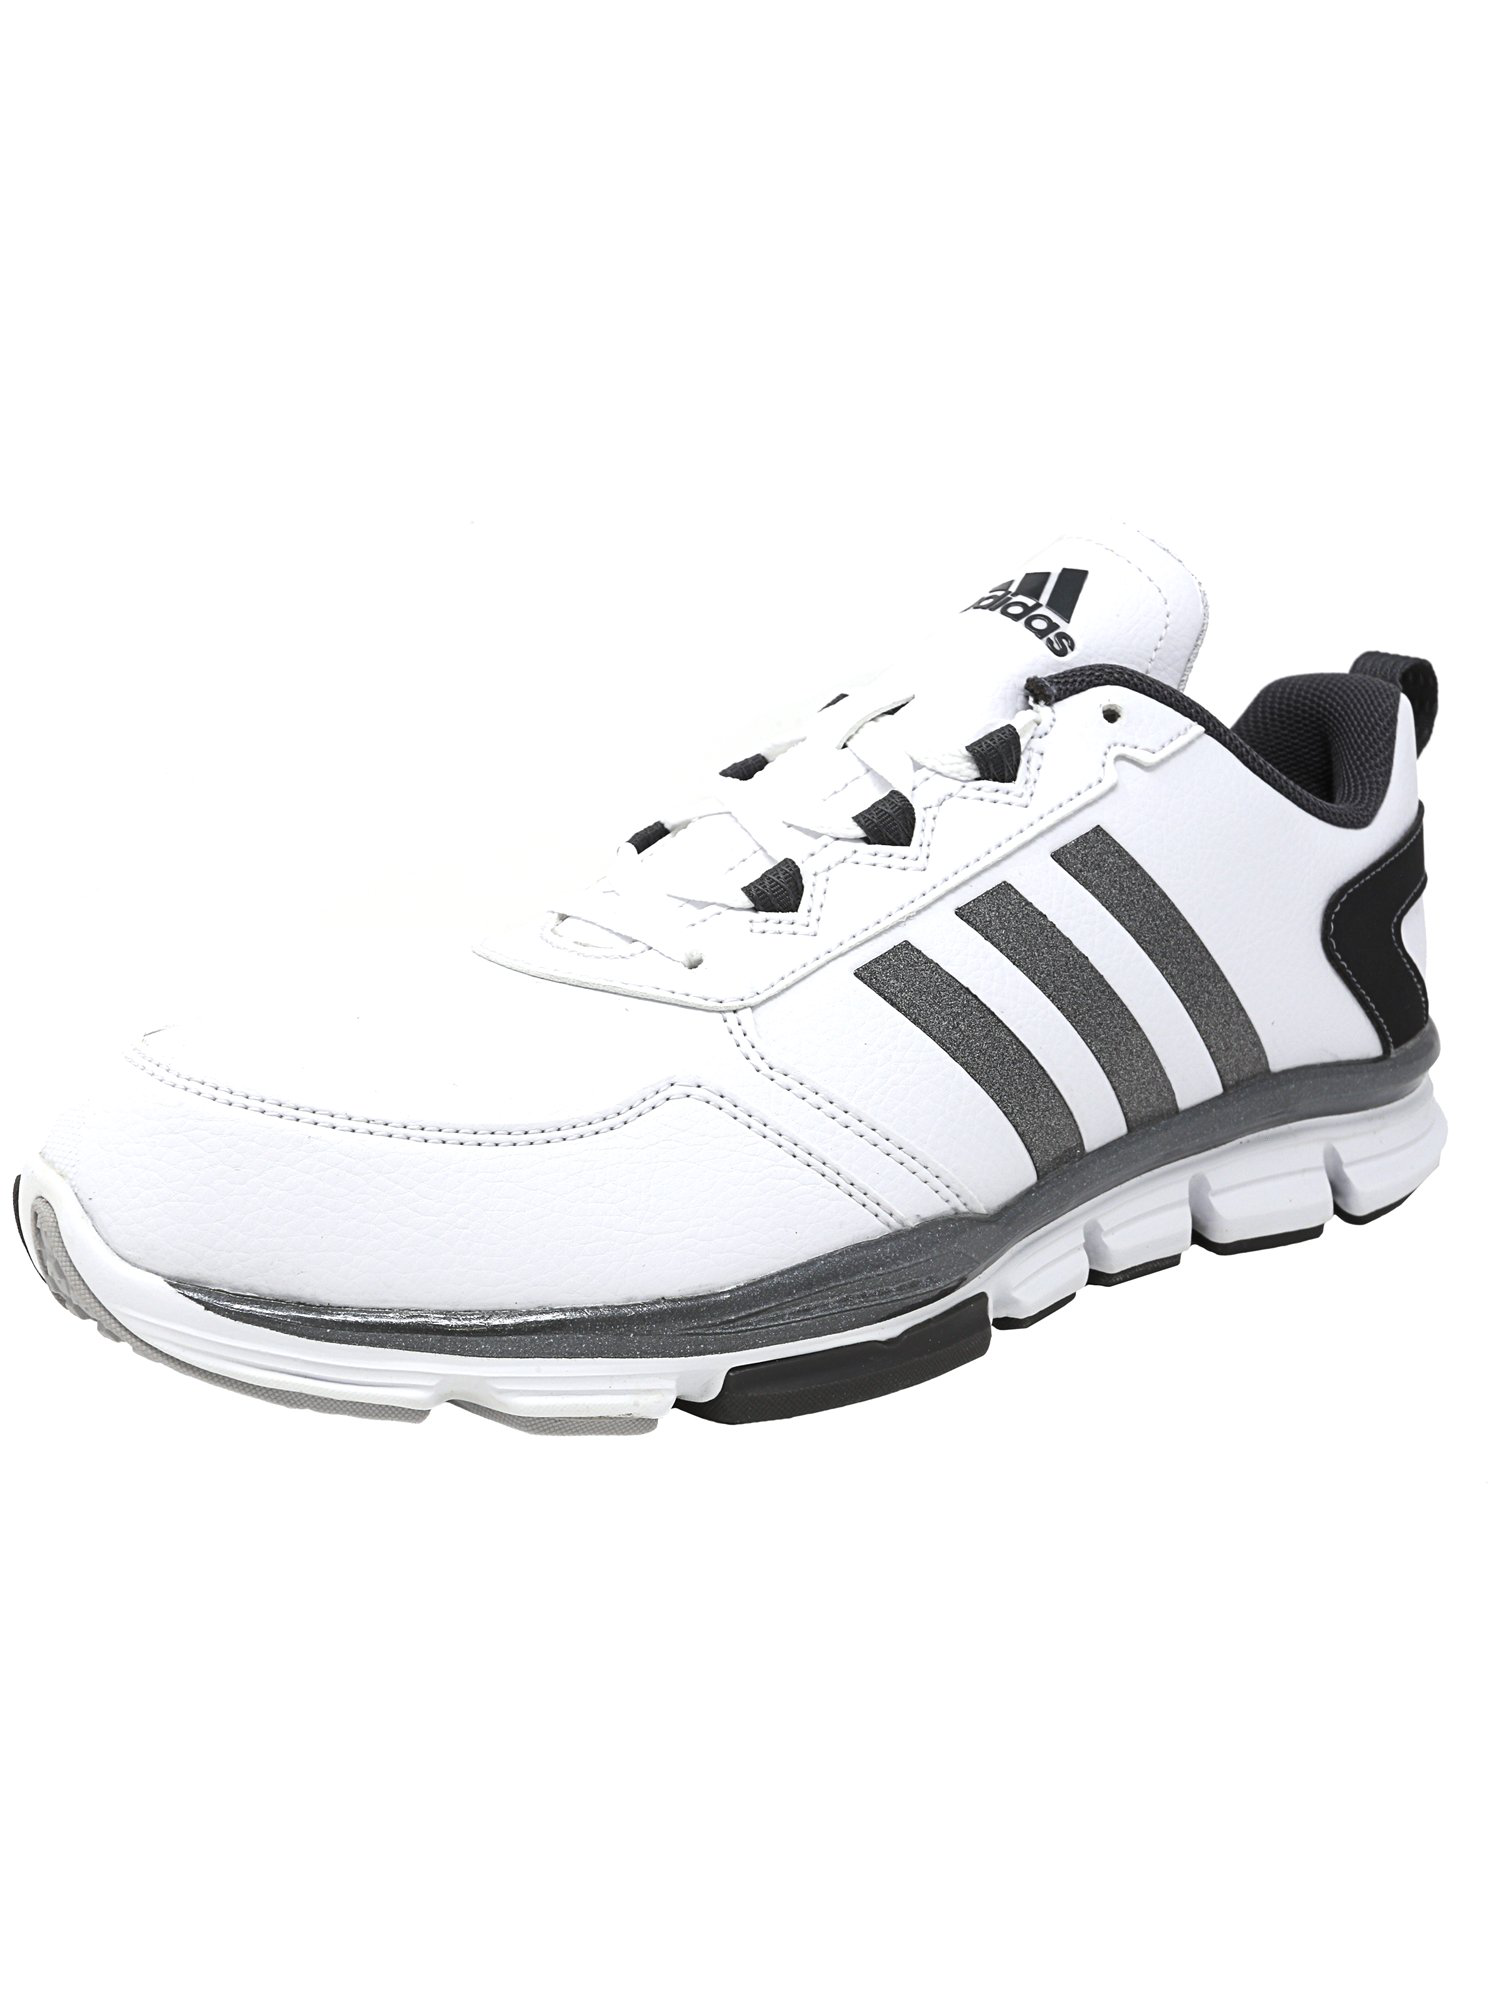 adidas men's speed trainer 2 training shoes